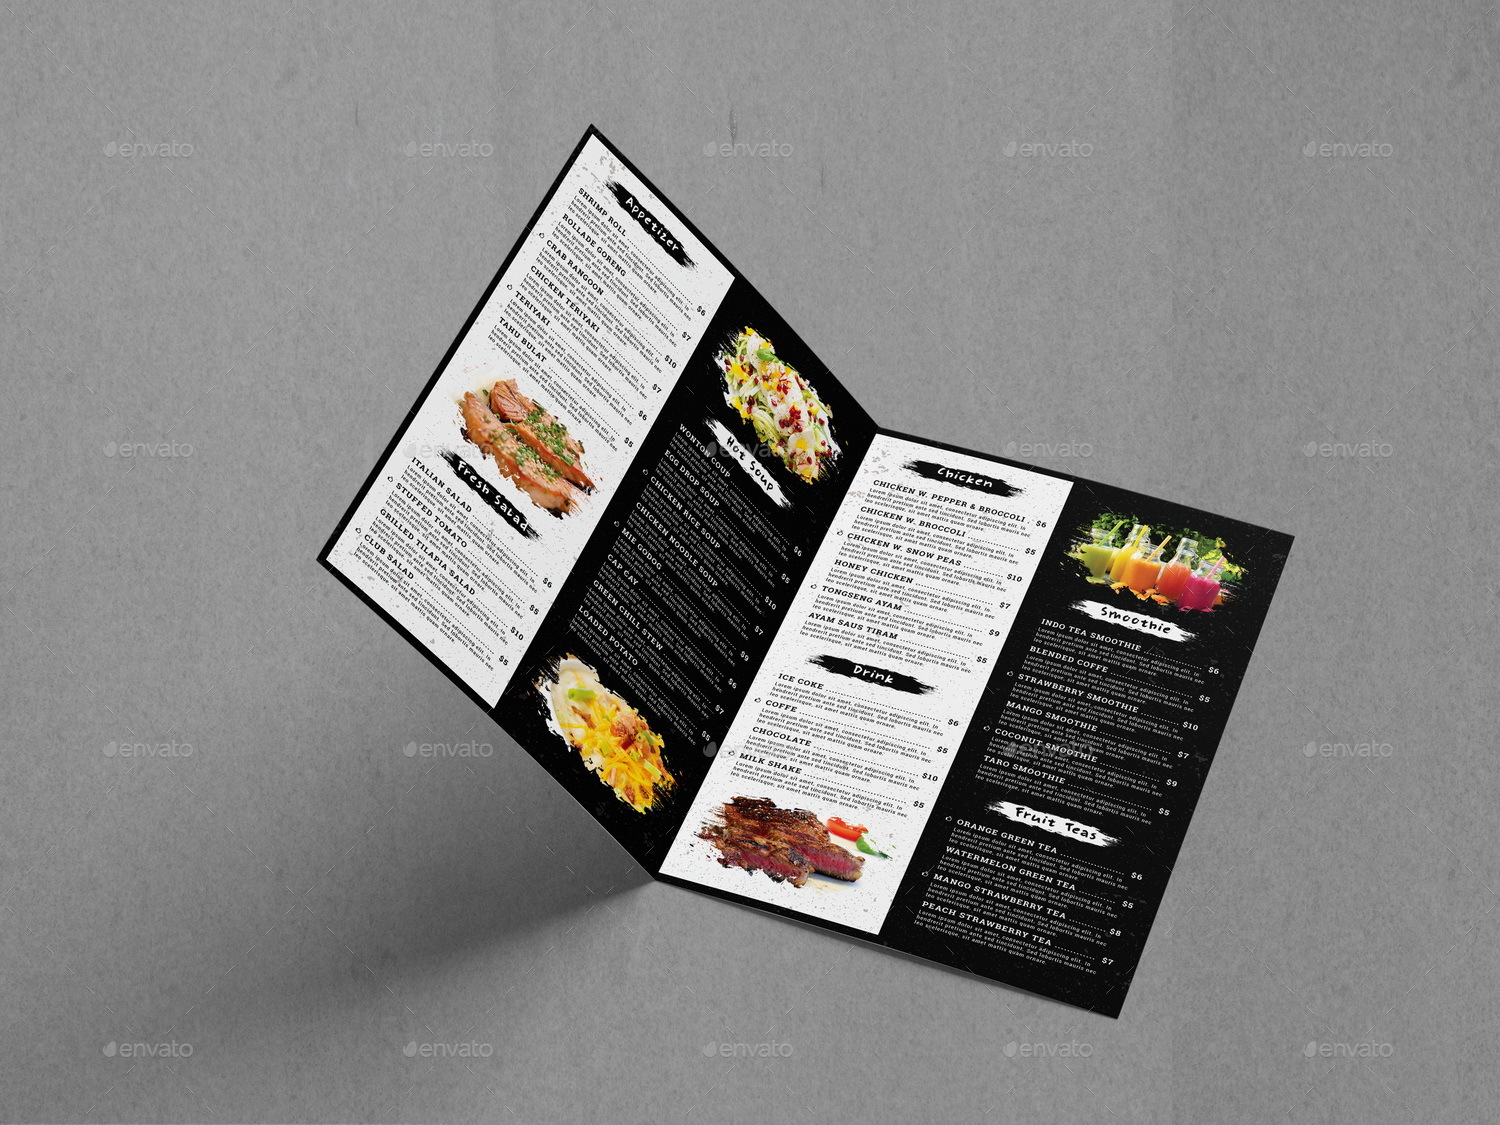 BiFold Food Menu Brochure Template by Geelator  GraphicRiver Regarding Bi Fold Menu Template